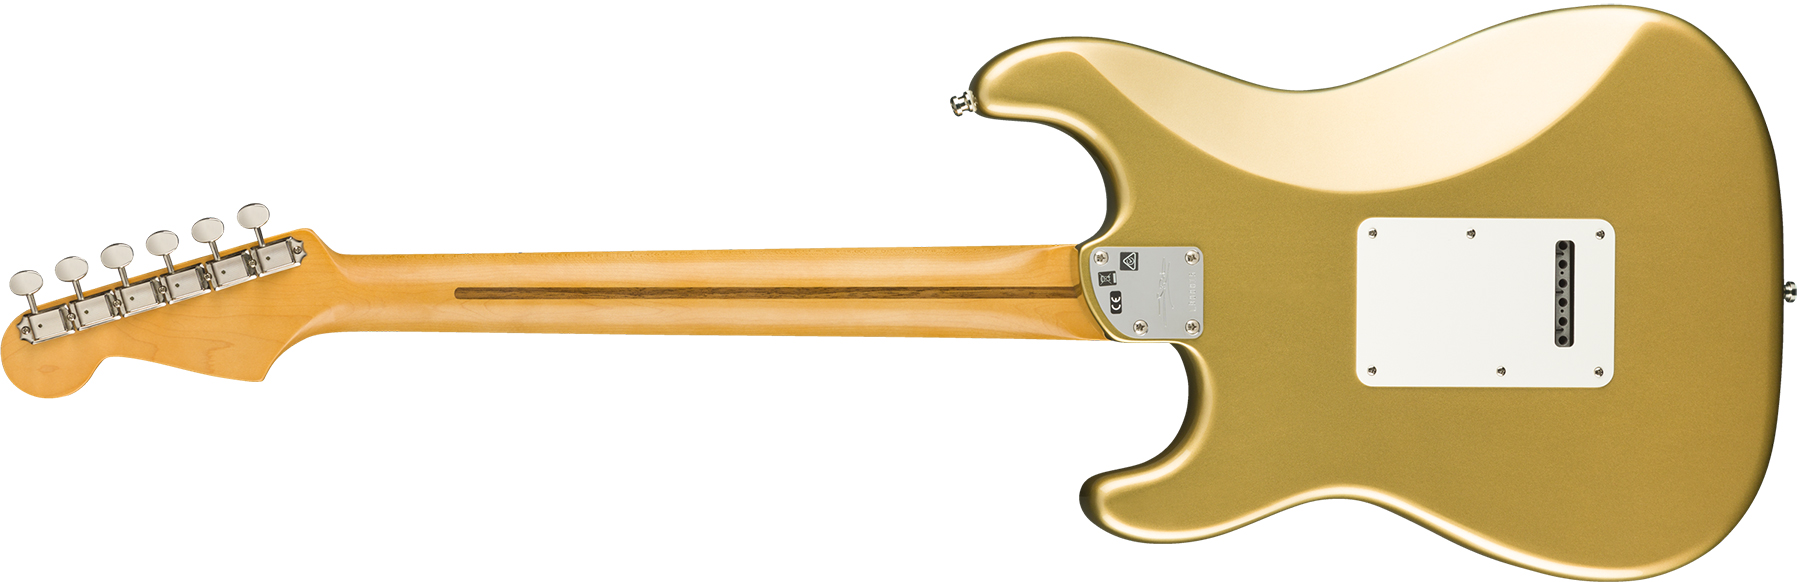 Fender Strat Lincoln Brewster Usa Signature Mn - Aztec Gold - E-Gitarre in Str-Form - Variation 1